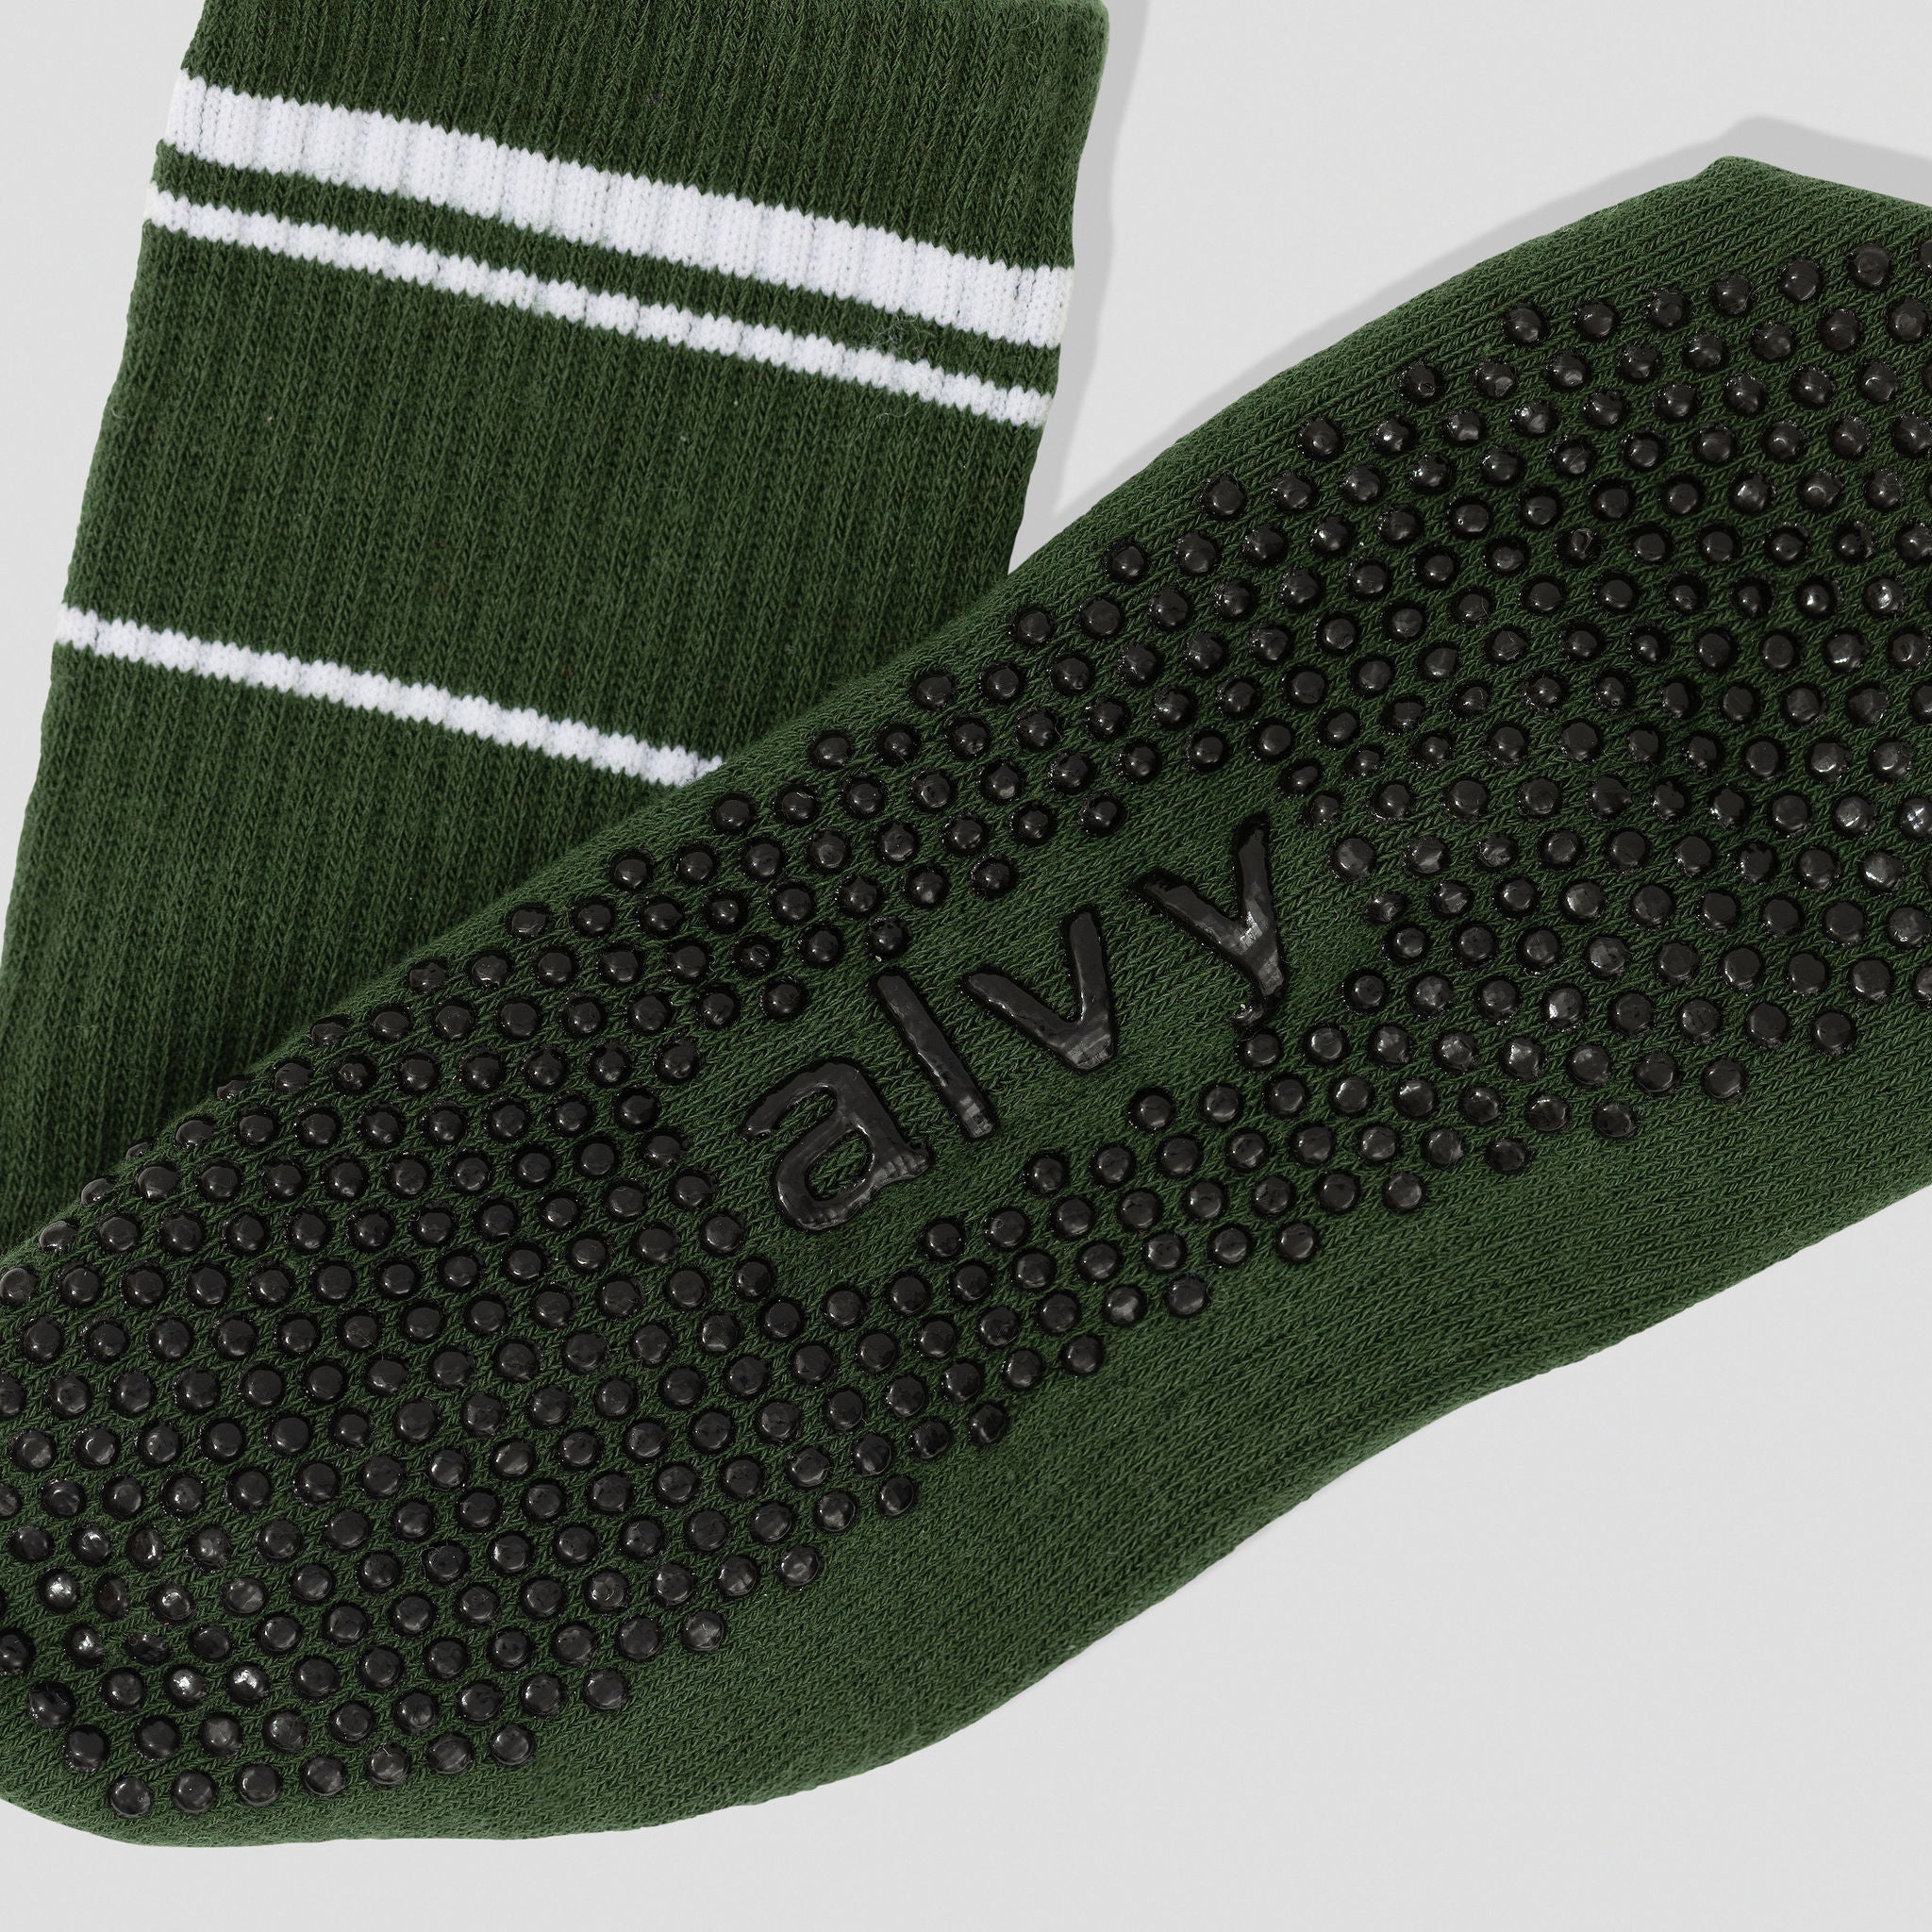 Alvy crew forest green sock grips 